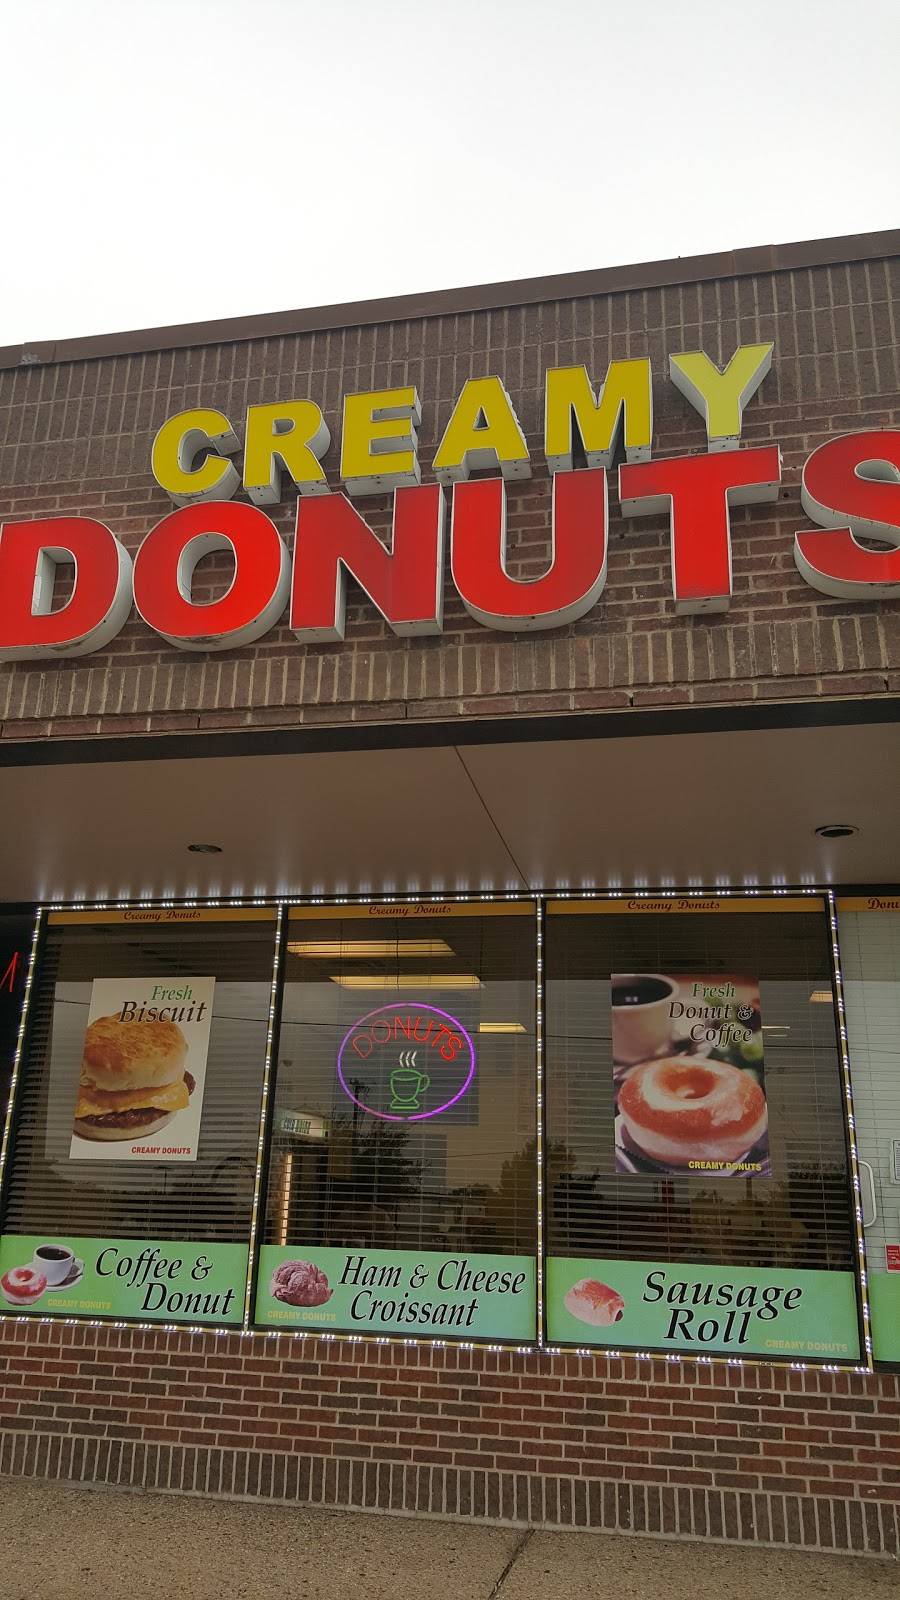 Creamy Doughnuts | 1869 N Plano Rd, Richardson, TX 75081 | Phone: (972) 889-1414